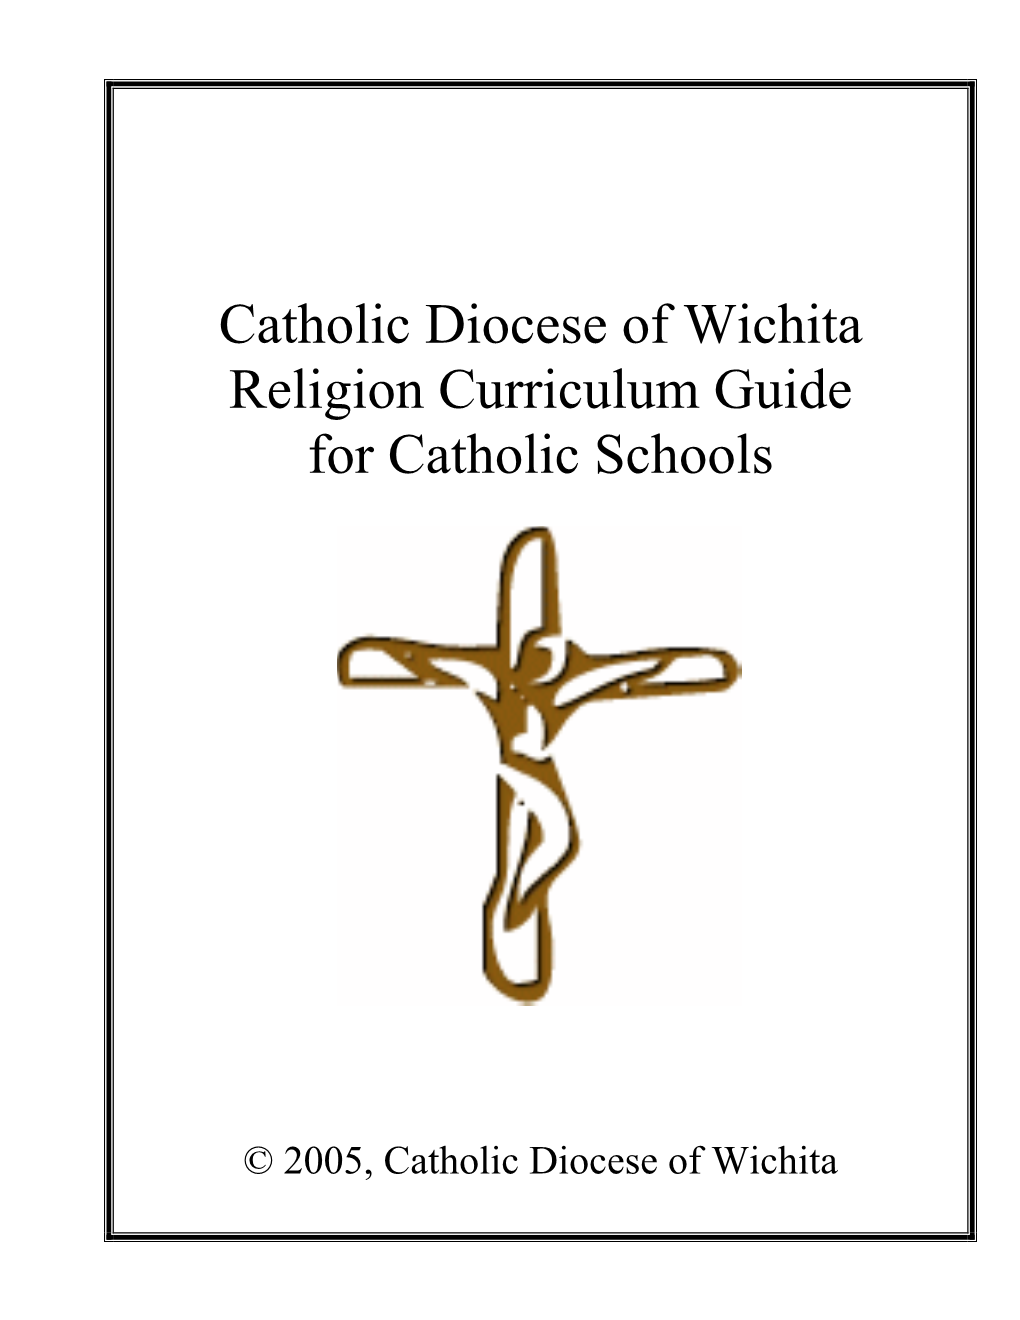 Catholic Diocese of Wichita Religion Curriculum Guide for Catholic Schools